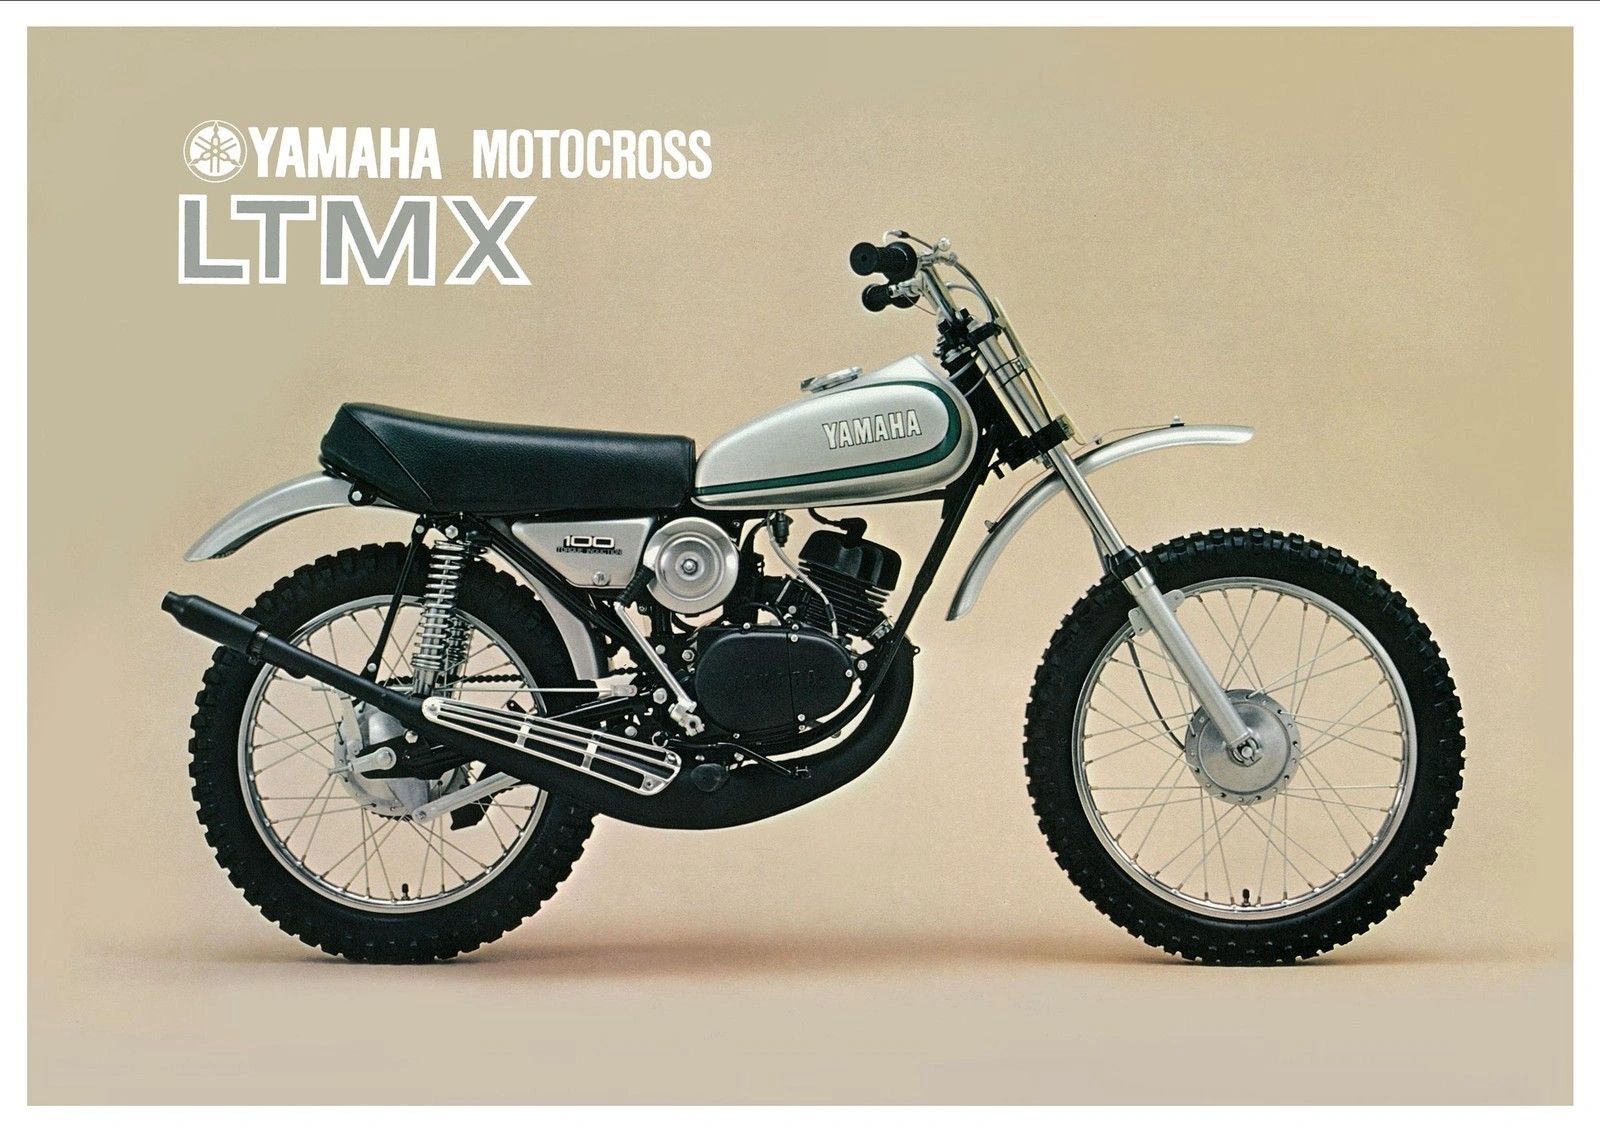 1973 Yamaha 100 LTMX vintage motocross race bike